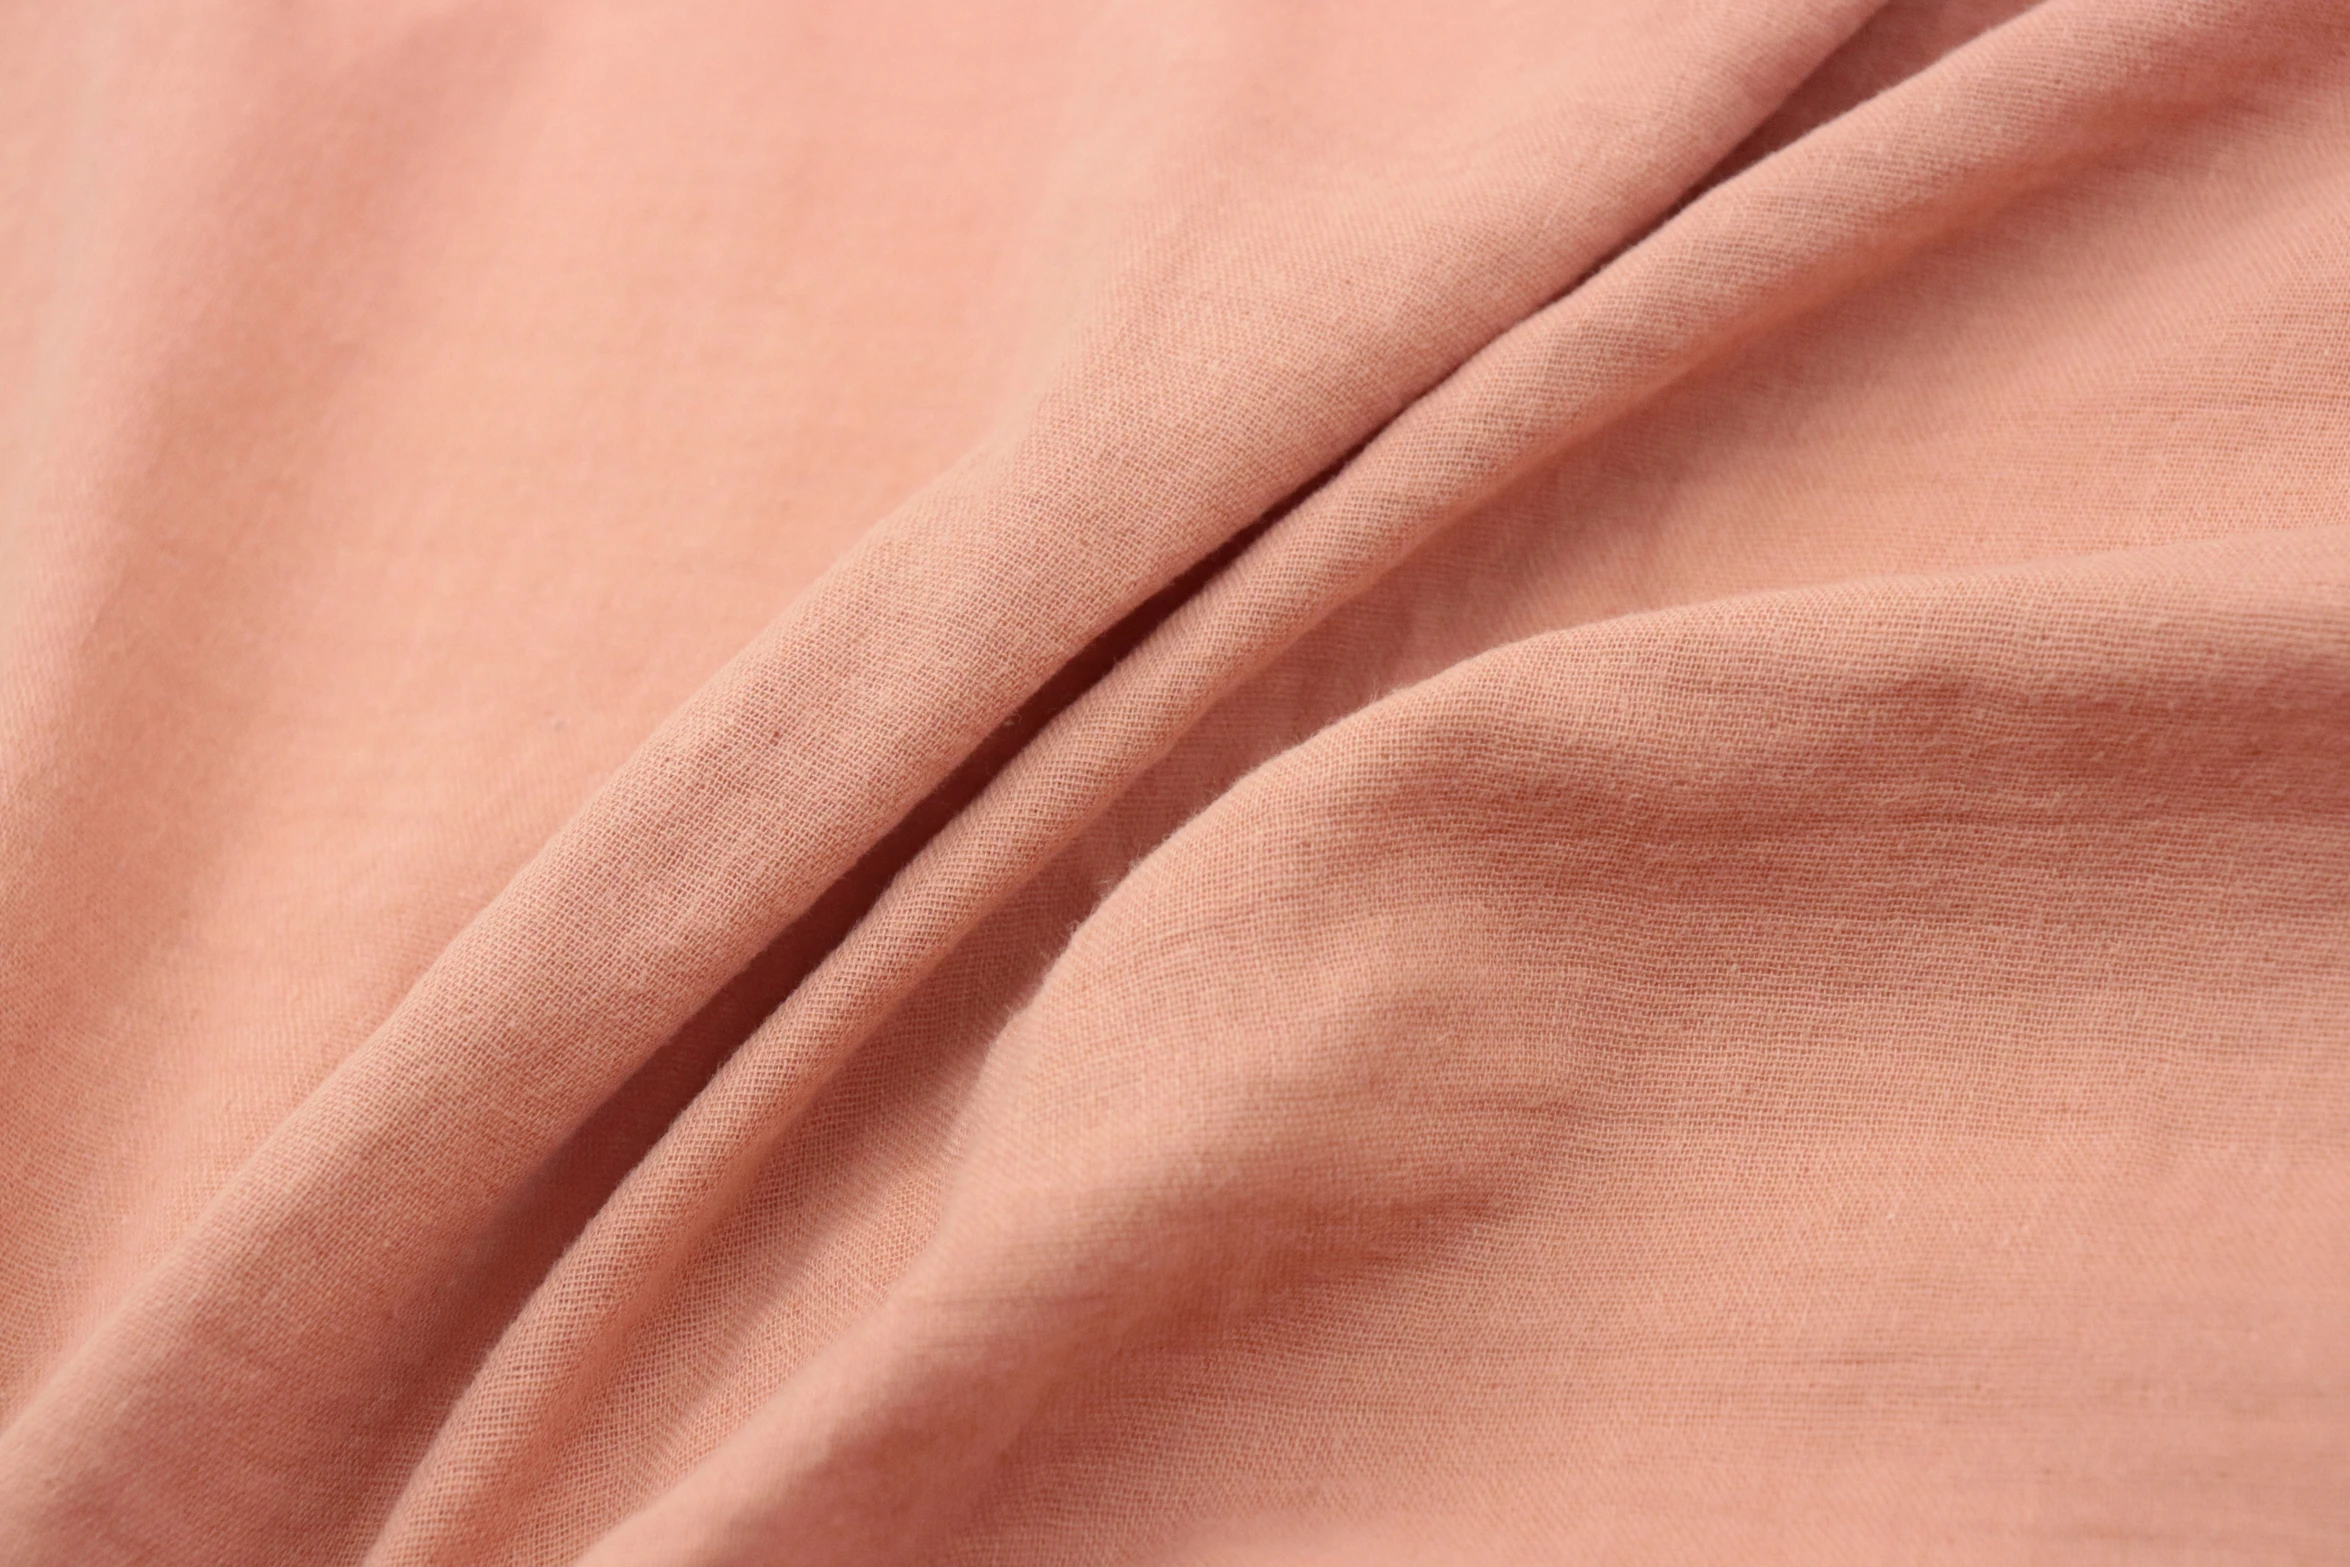 a plain pink fabric closeup showing the folds